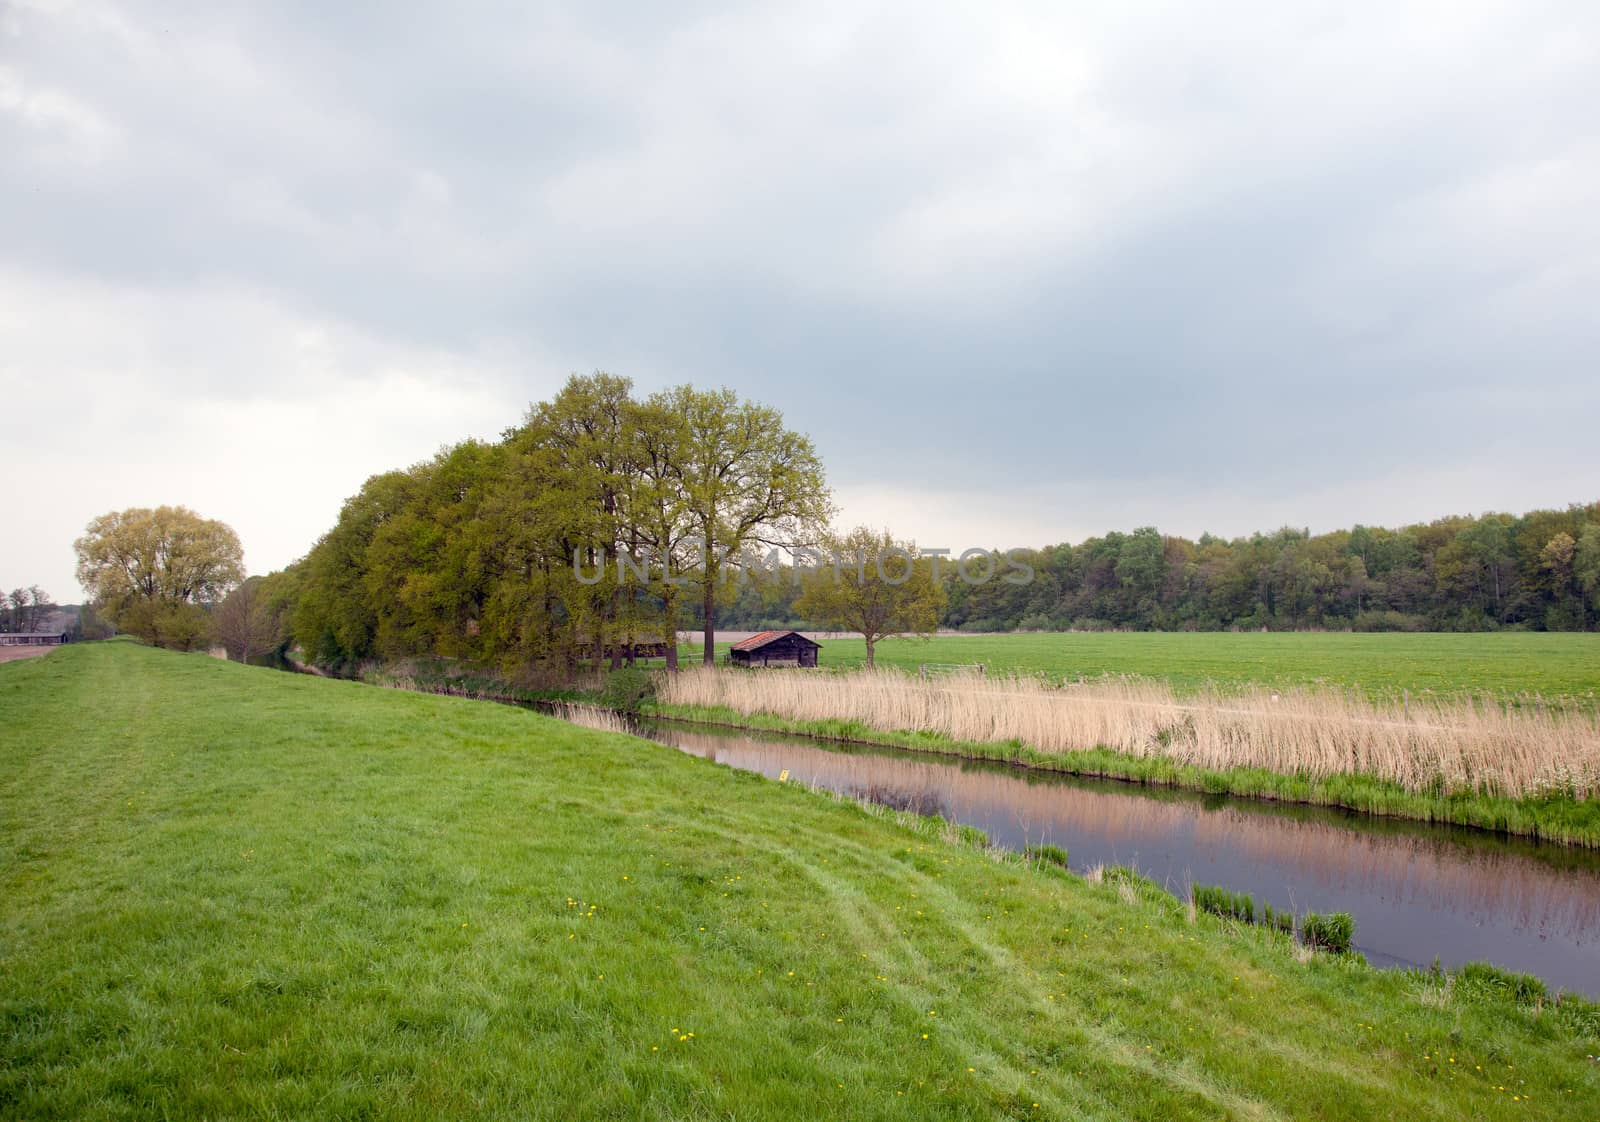 Valleikanaal near Veenendaal in The Netherlands by ahavelaar